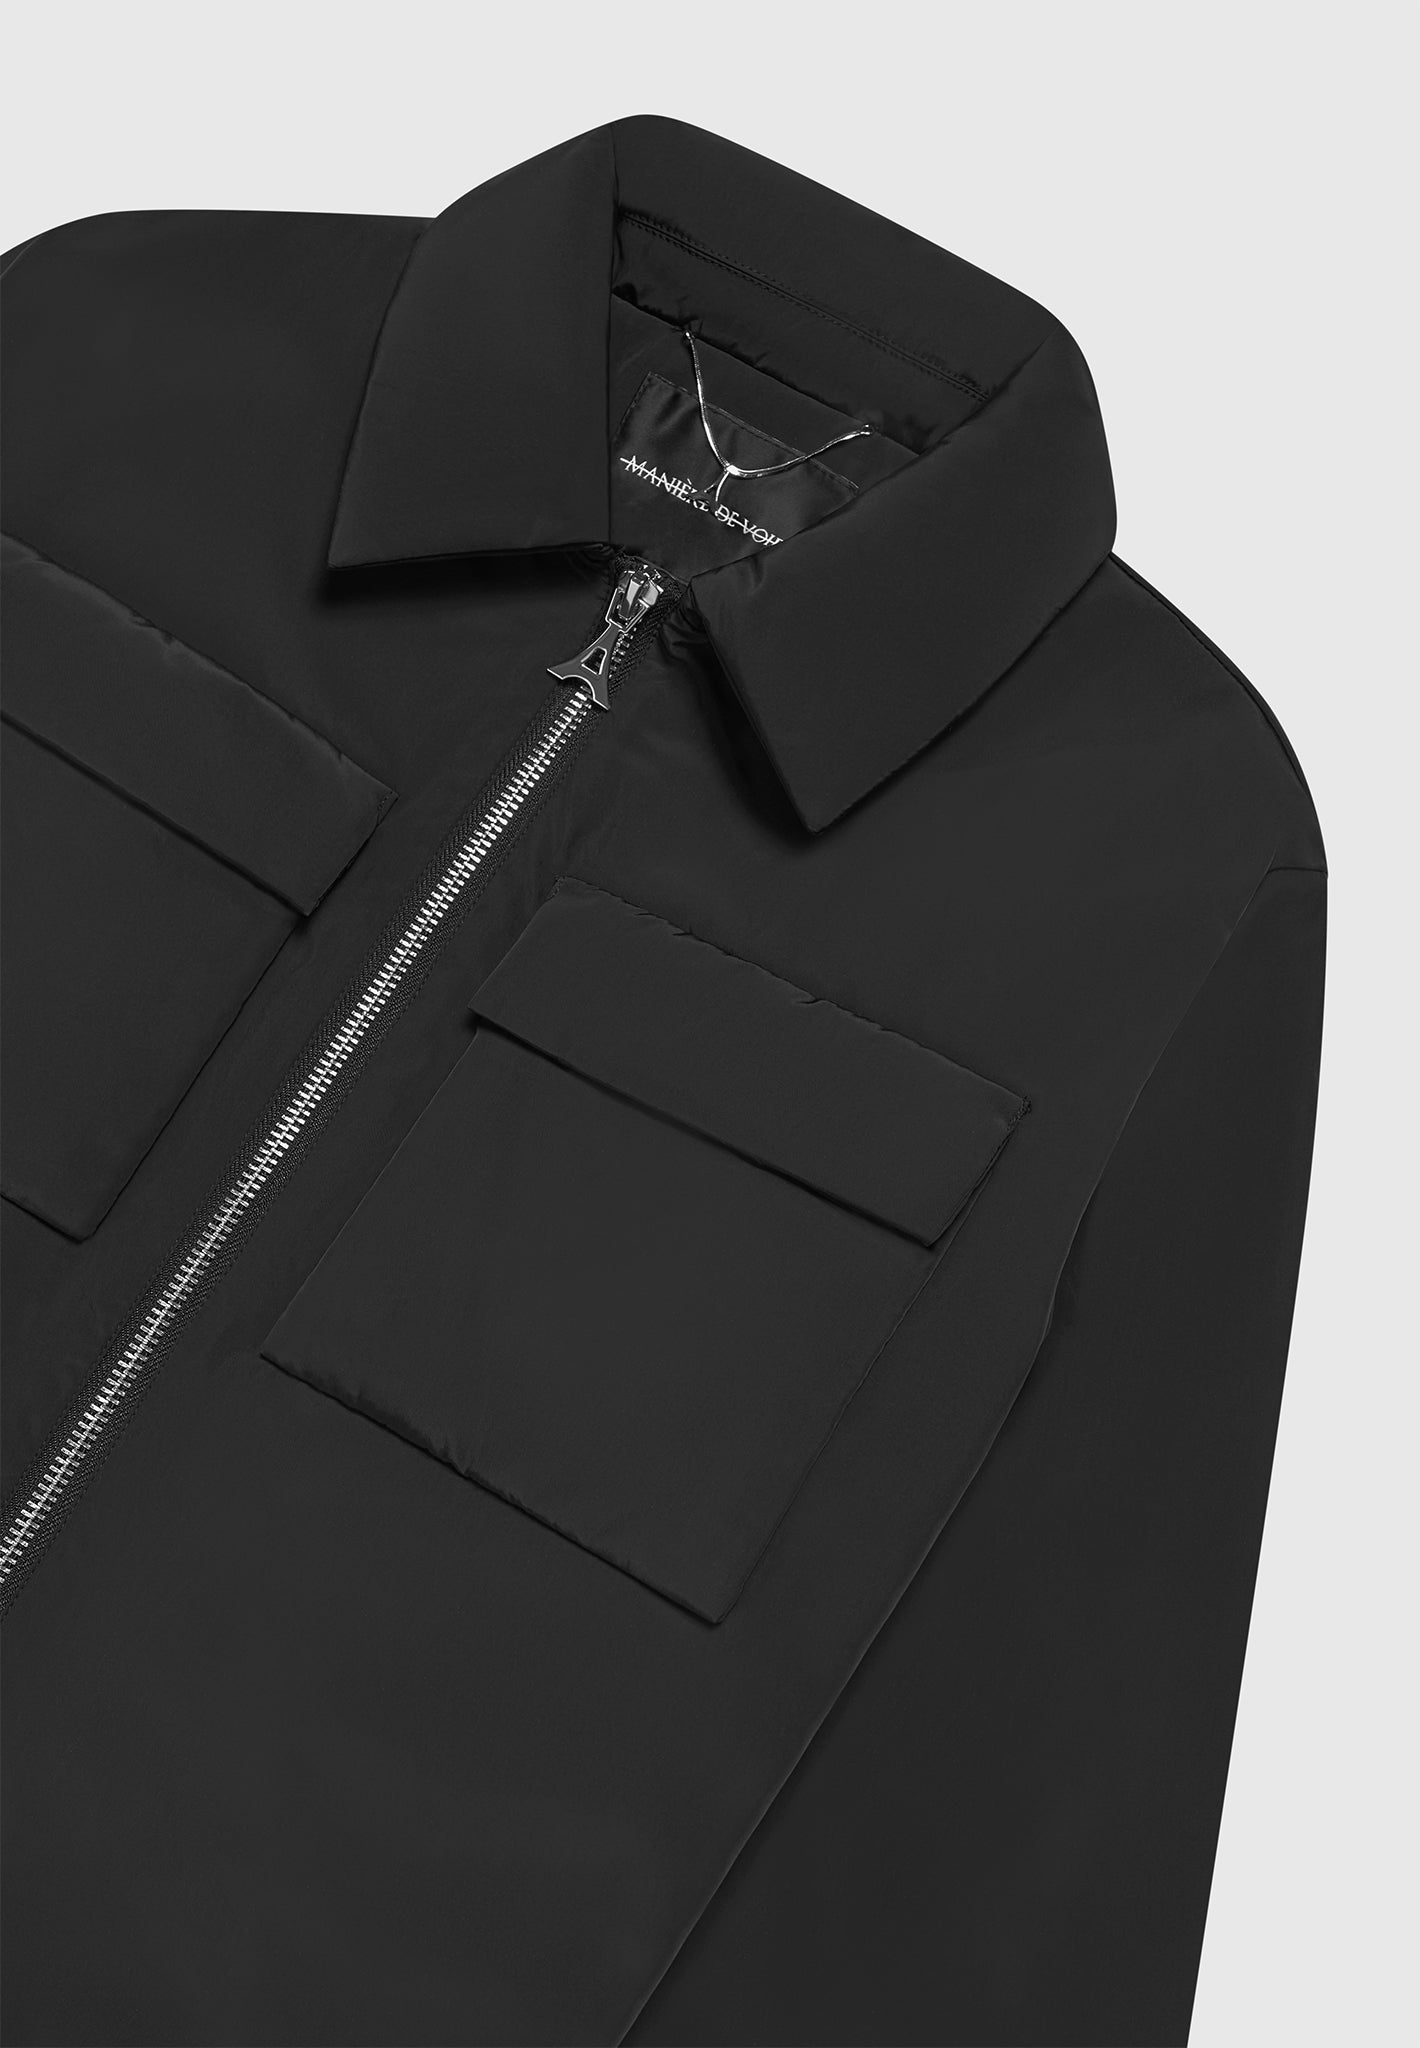 nylon-boxy-jacket-black